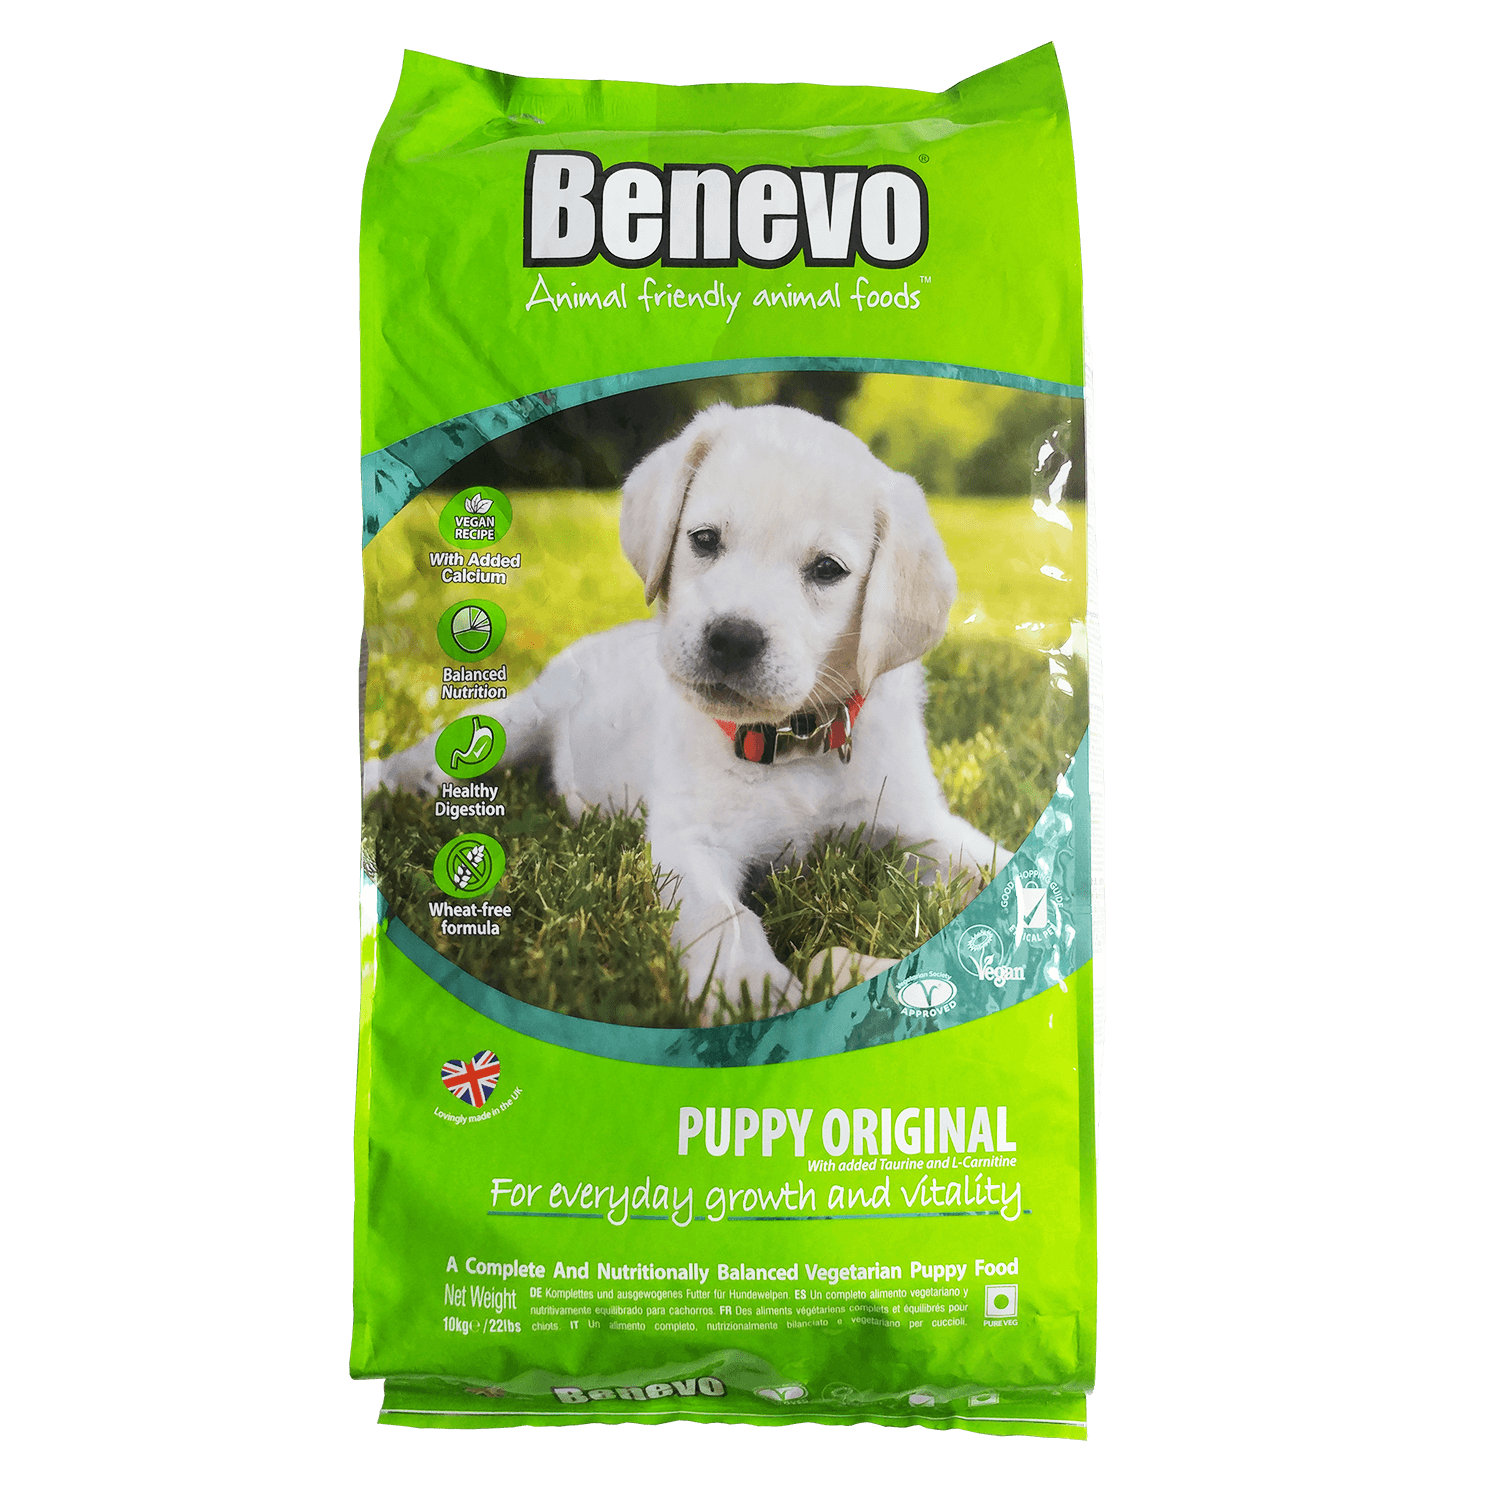 Benevo Puppy Original